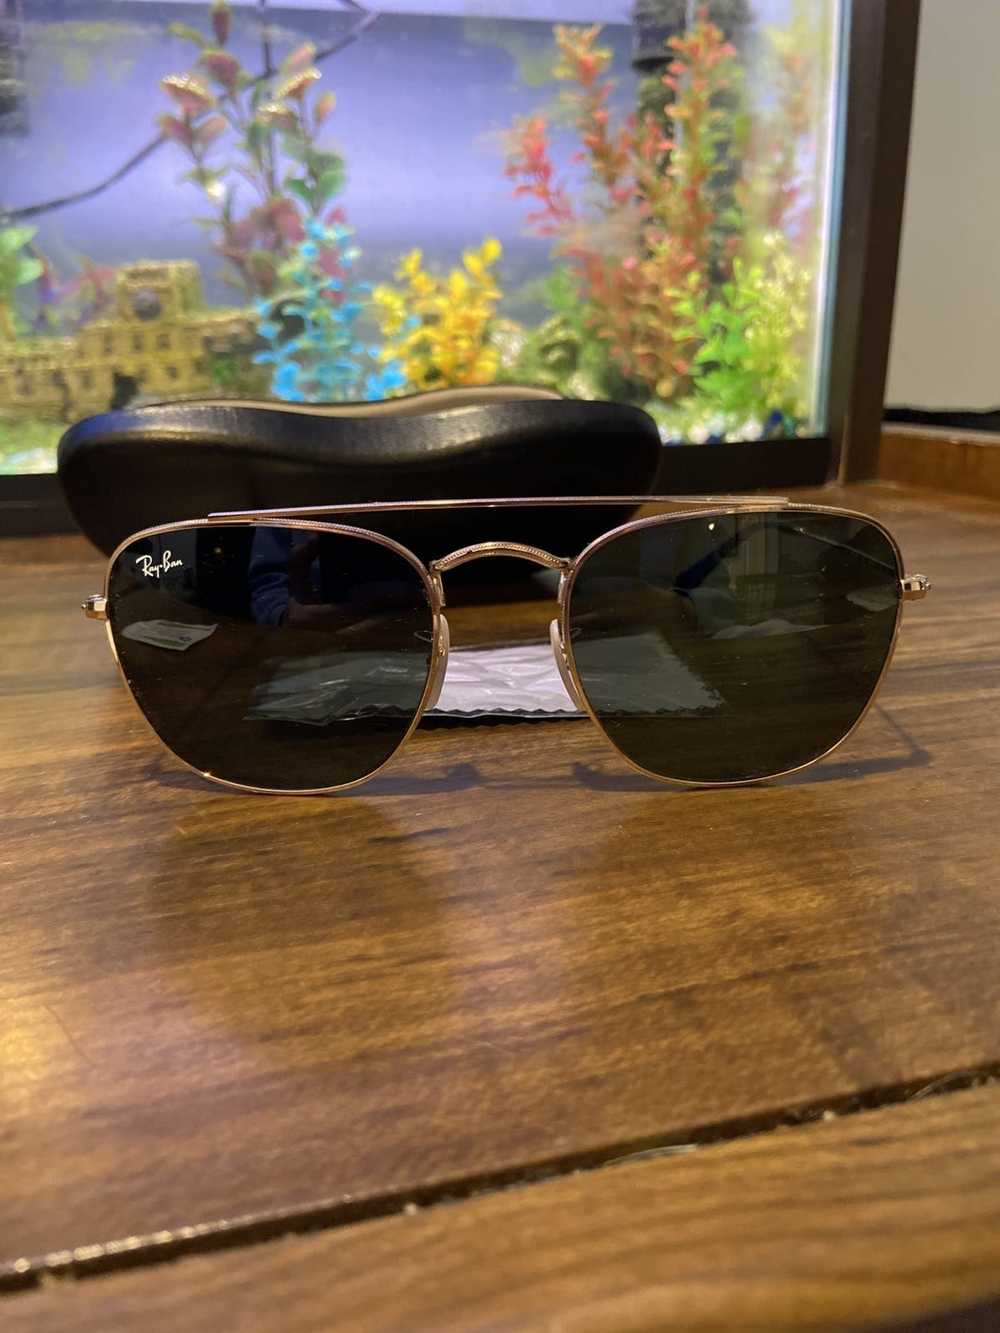 RayBan RayBan Sunglasses Gold Frame - image 4